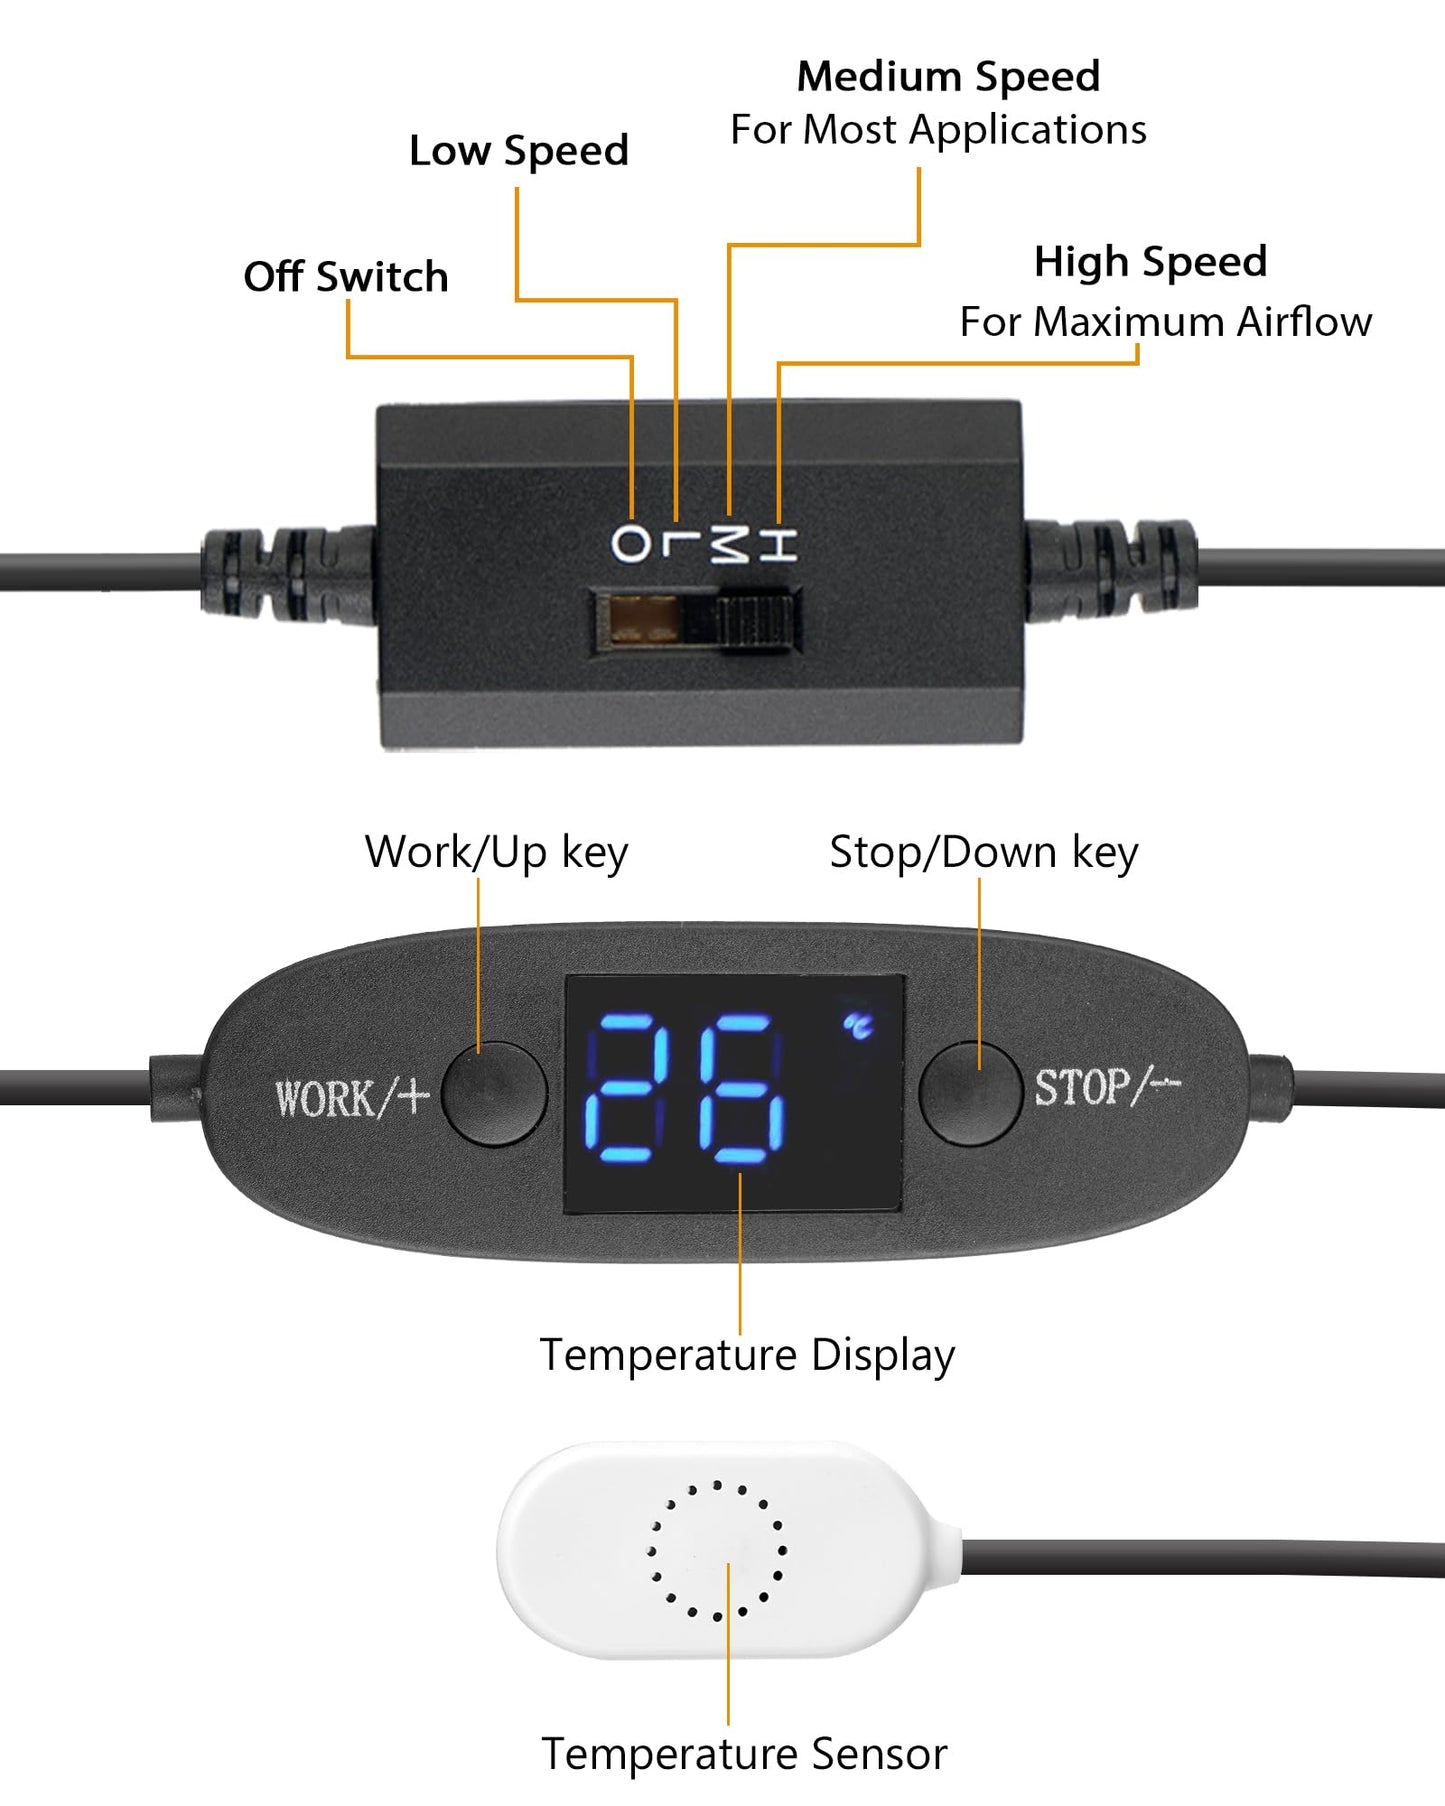 Digitalanzeige temperaturgesteuertes leises Lüftersystem, USB-Lüfter, 5V-Lüfter mit modernem gebürstetem schwarzem Aluminiumrahmen für Heimkino-AV-Schränke (euroharry)